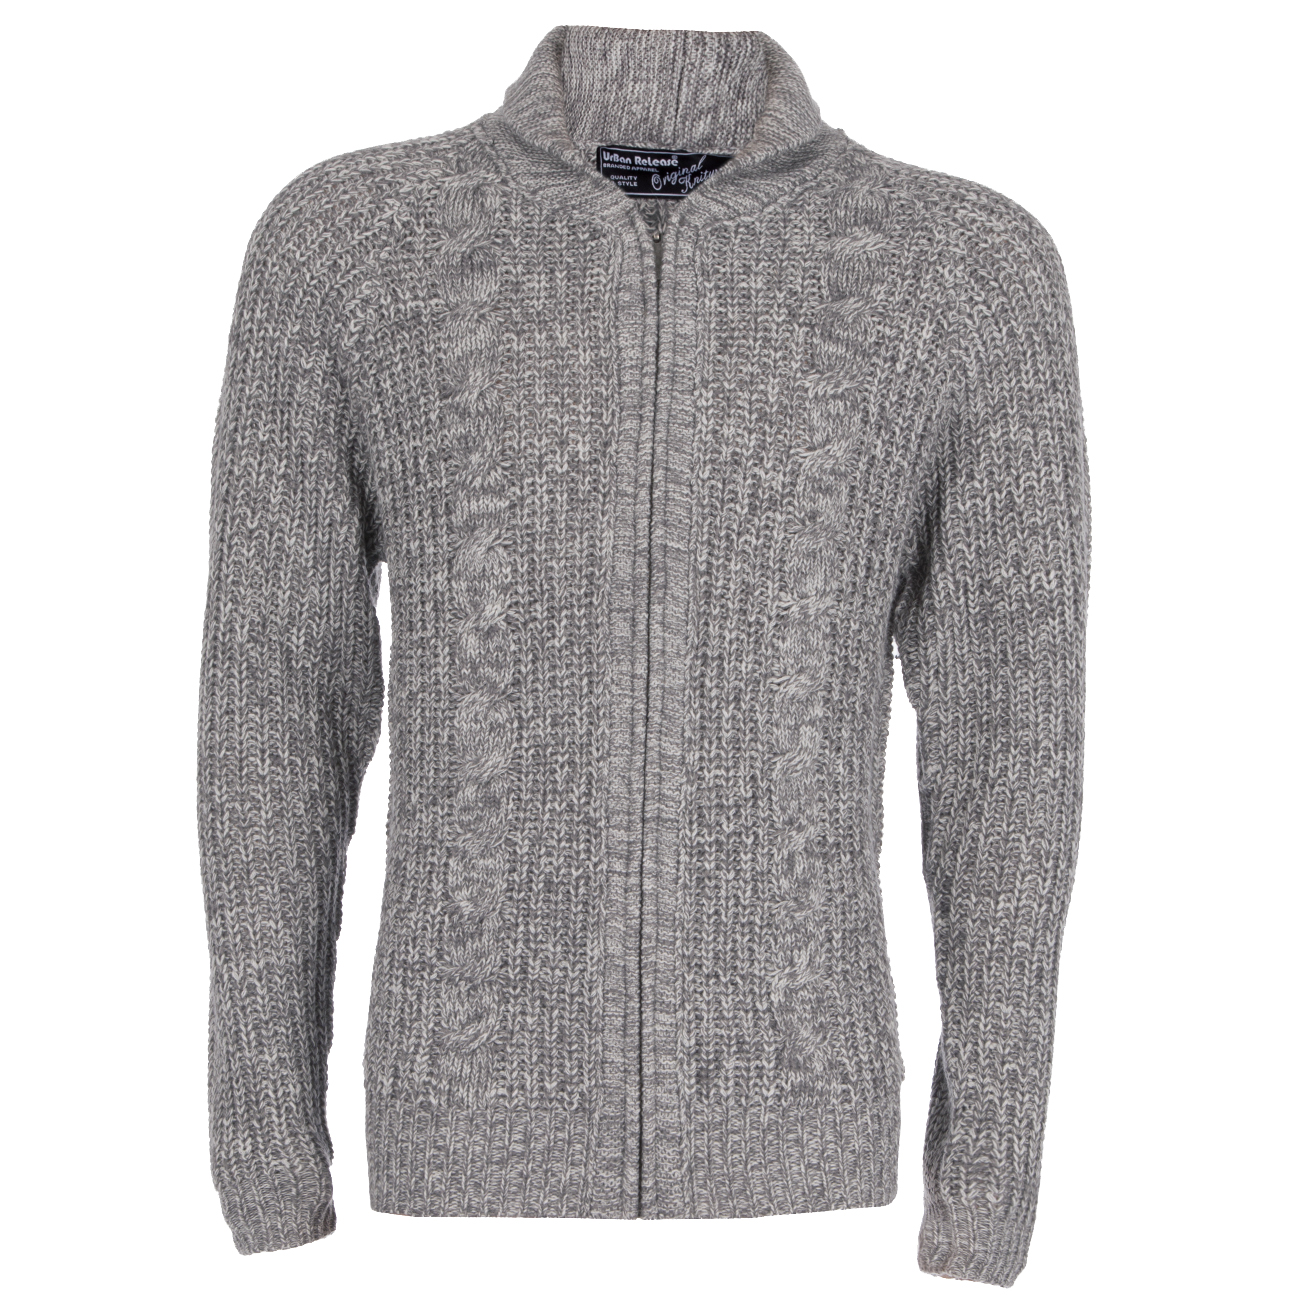 Mens Cable Knit Cardigan Full Zip Chunky Sweater Warm Winter Elegant ...